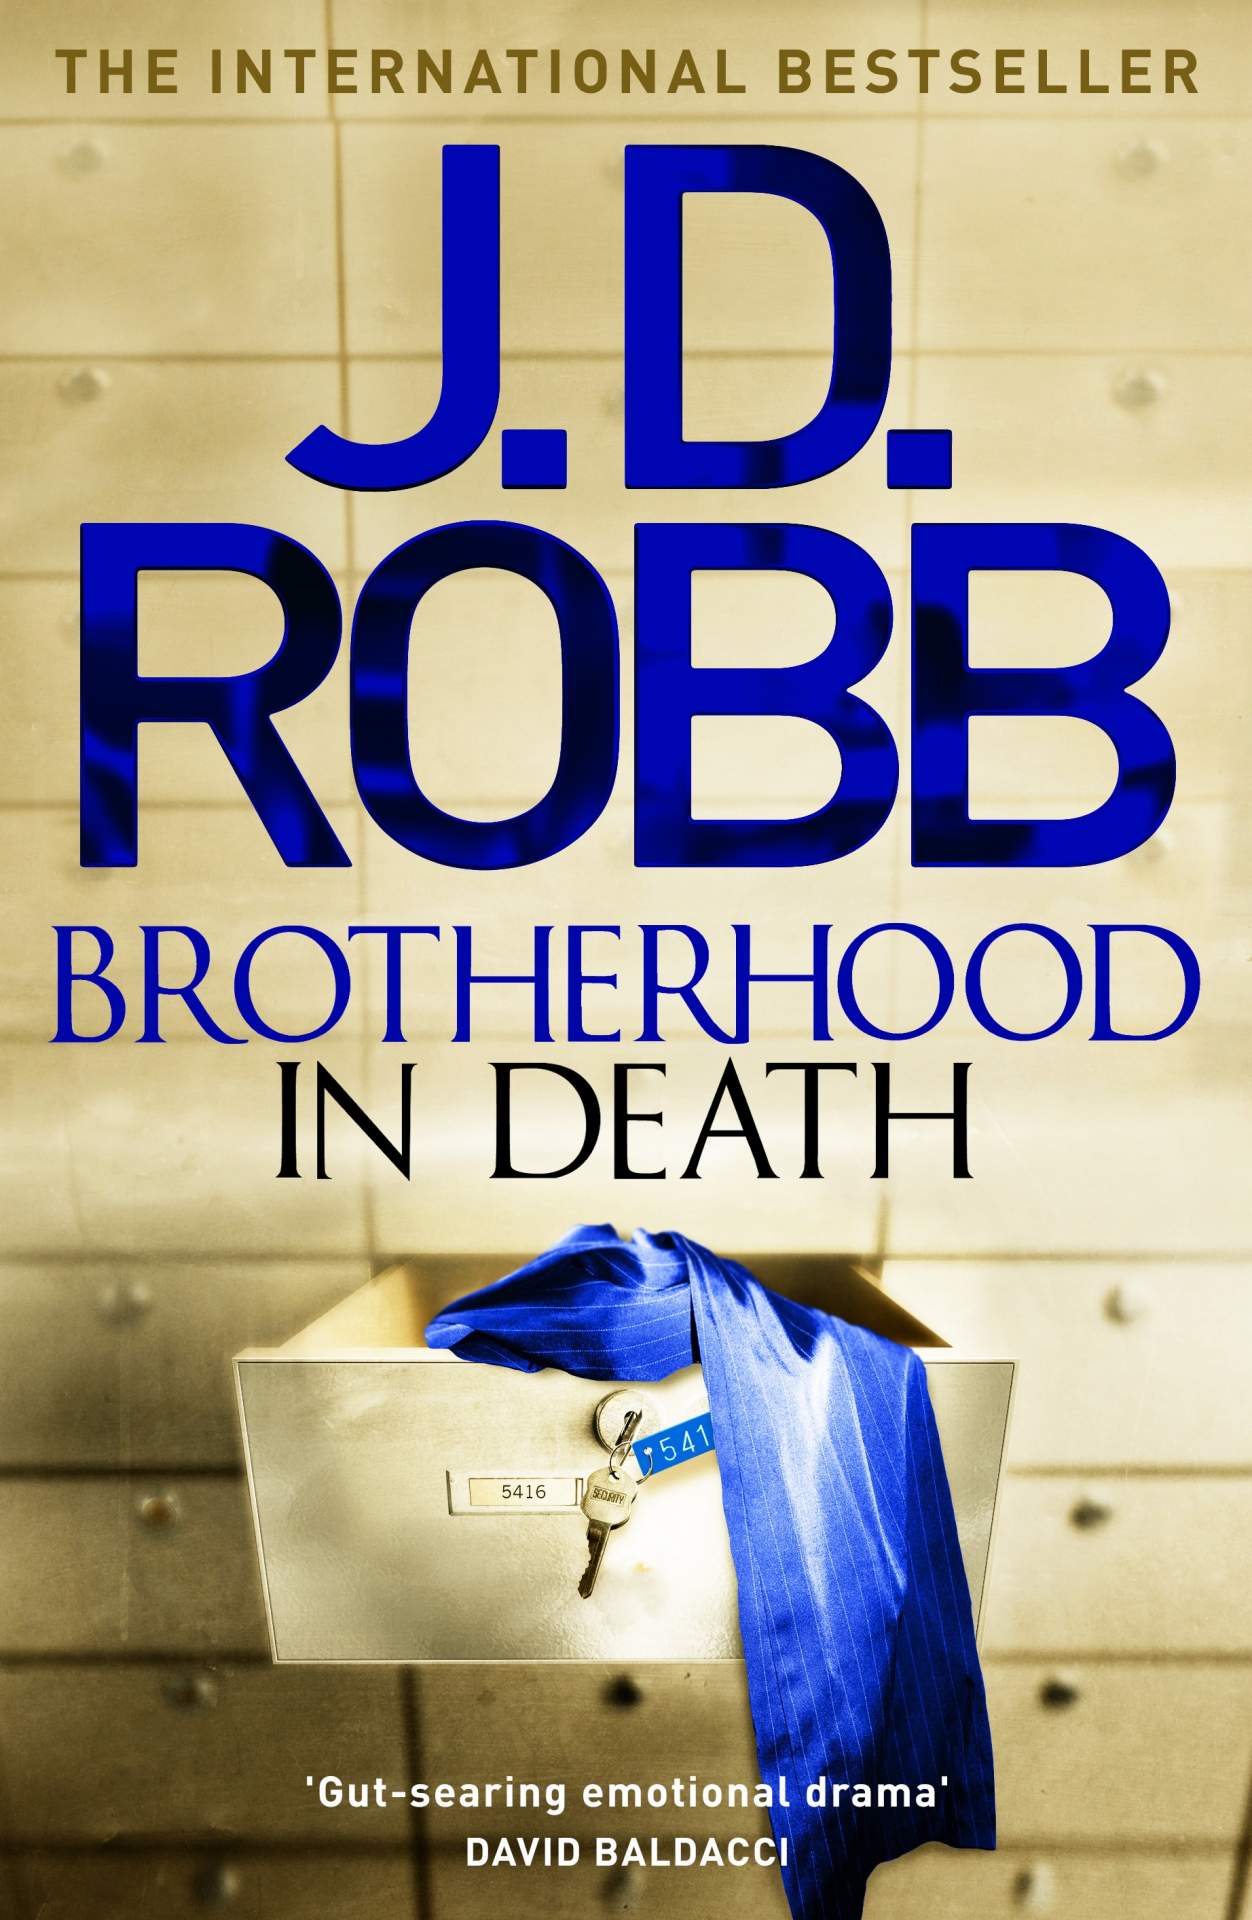 BROTHERHOOD IN DEATH by JD Robb